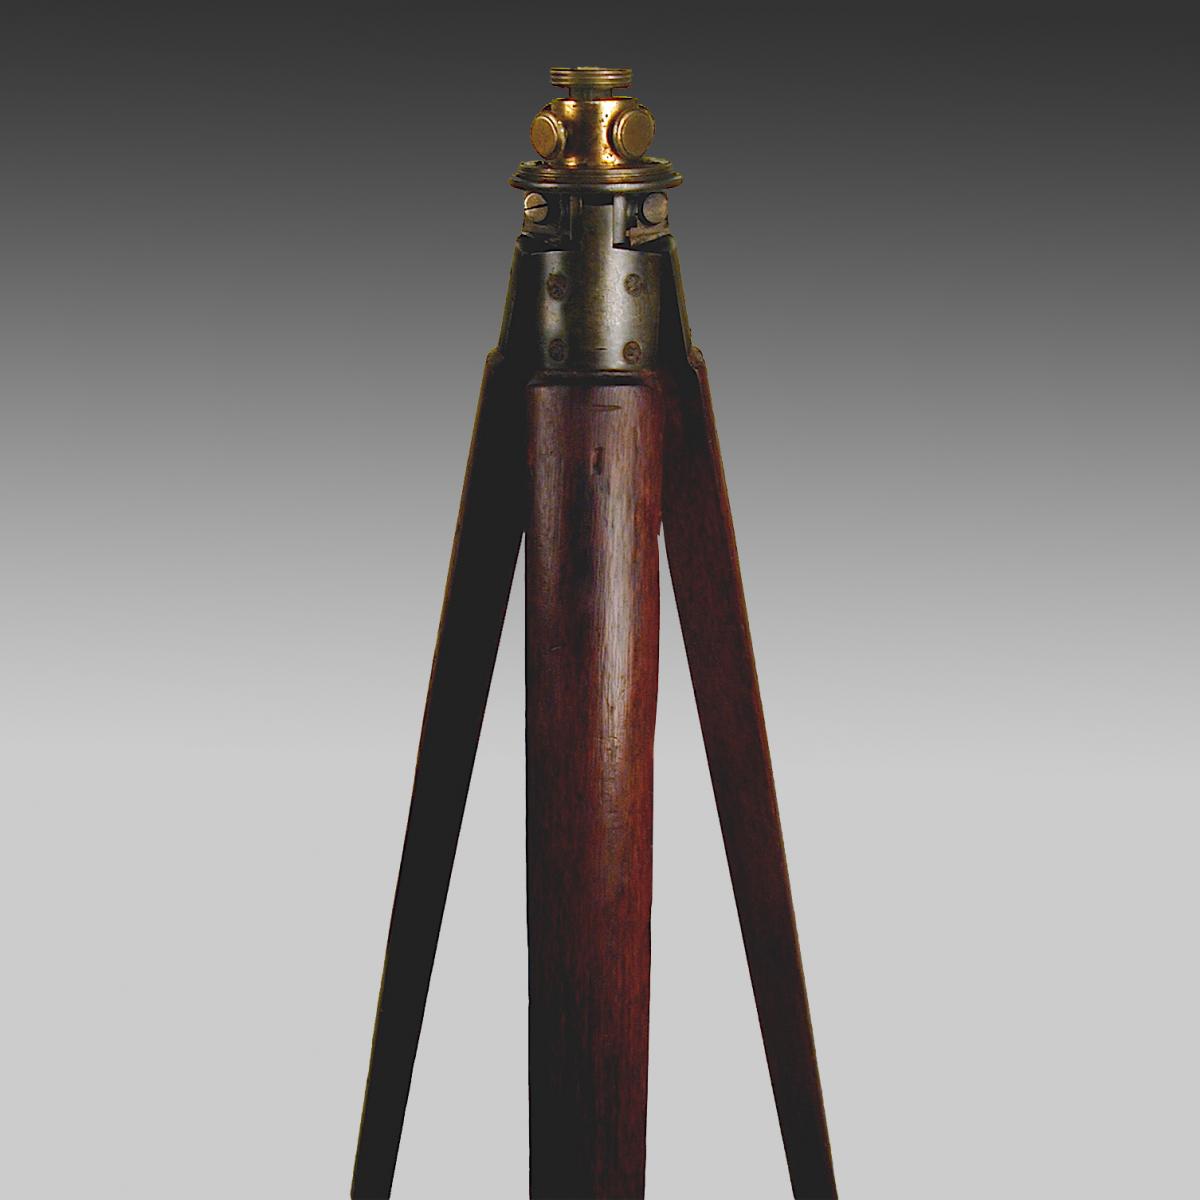 19th century mahogany cased surveyor's theodolite